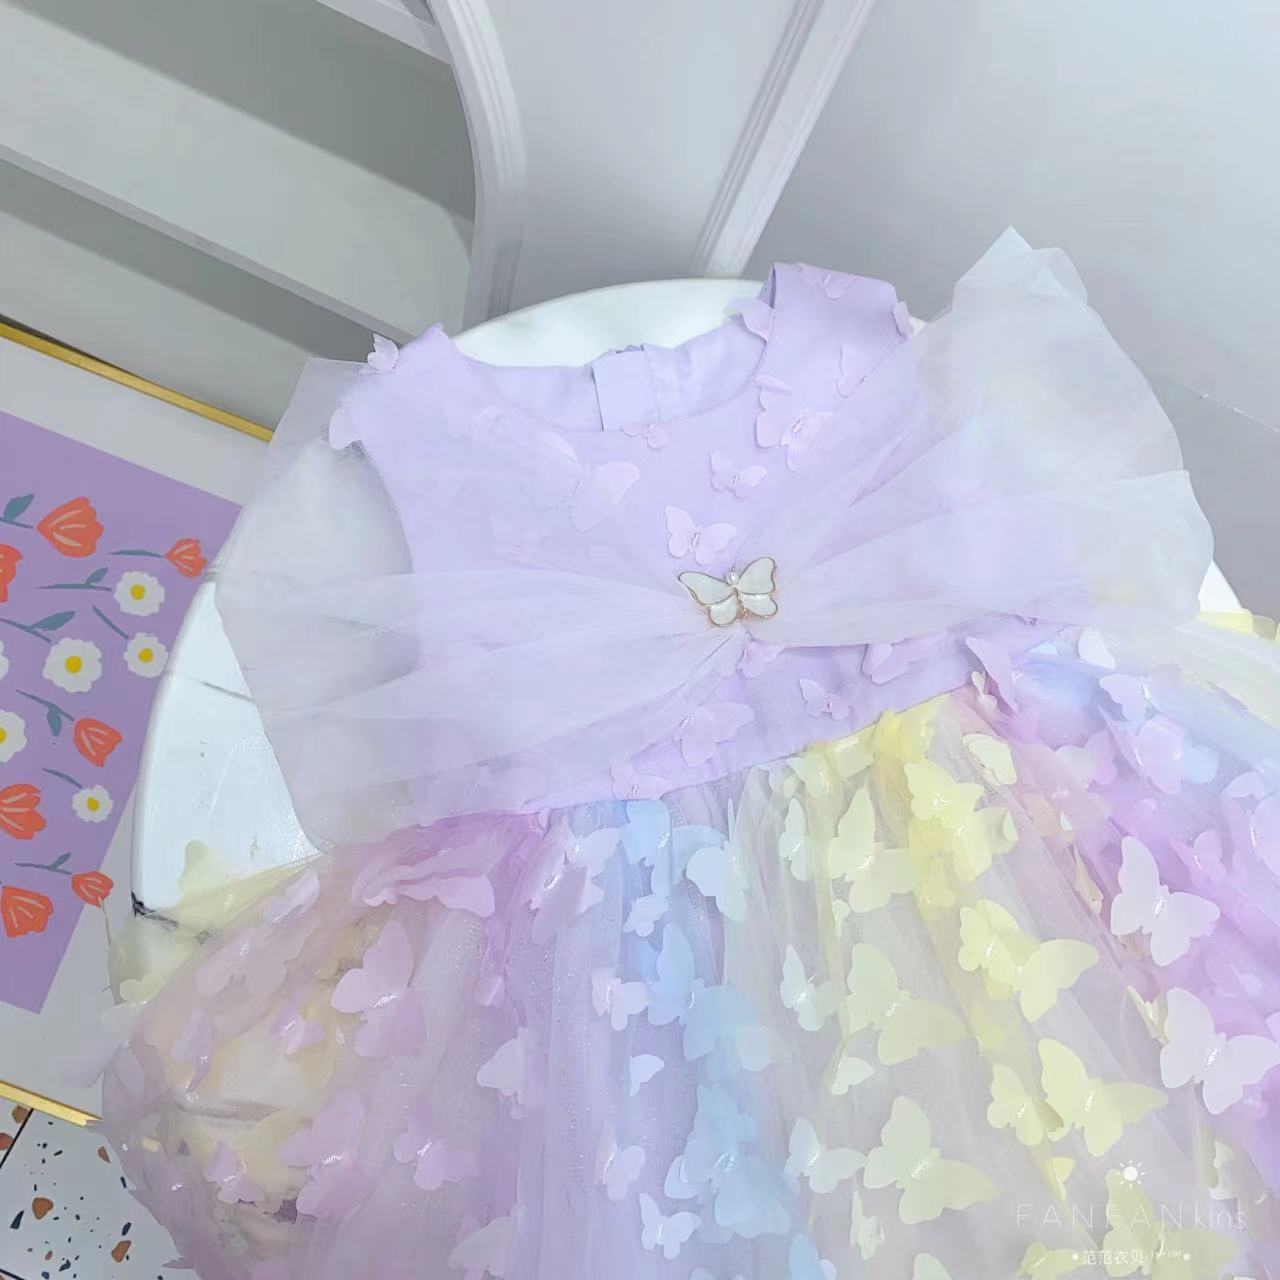 new fashion design tulle party dress up rainbow princess dresses kids girls mesh dresses Eid gift